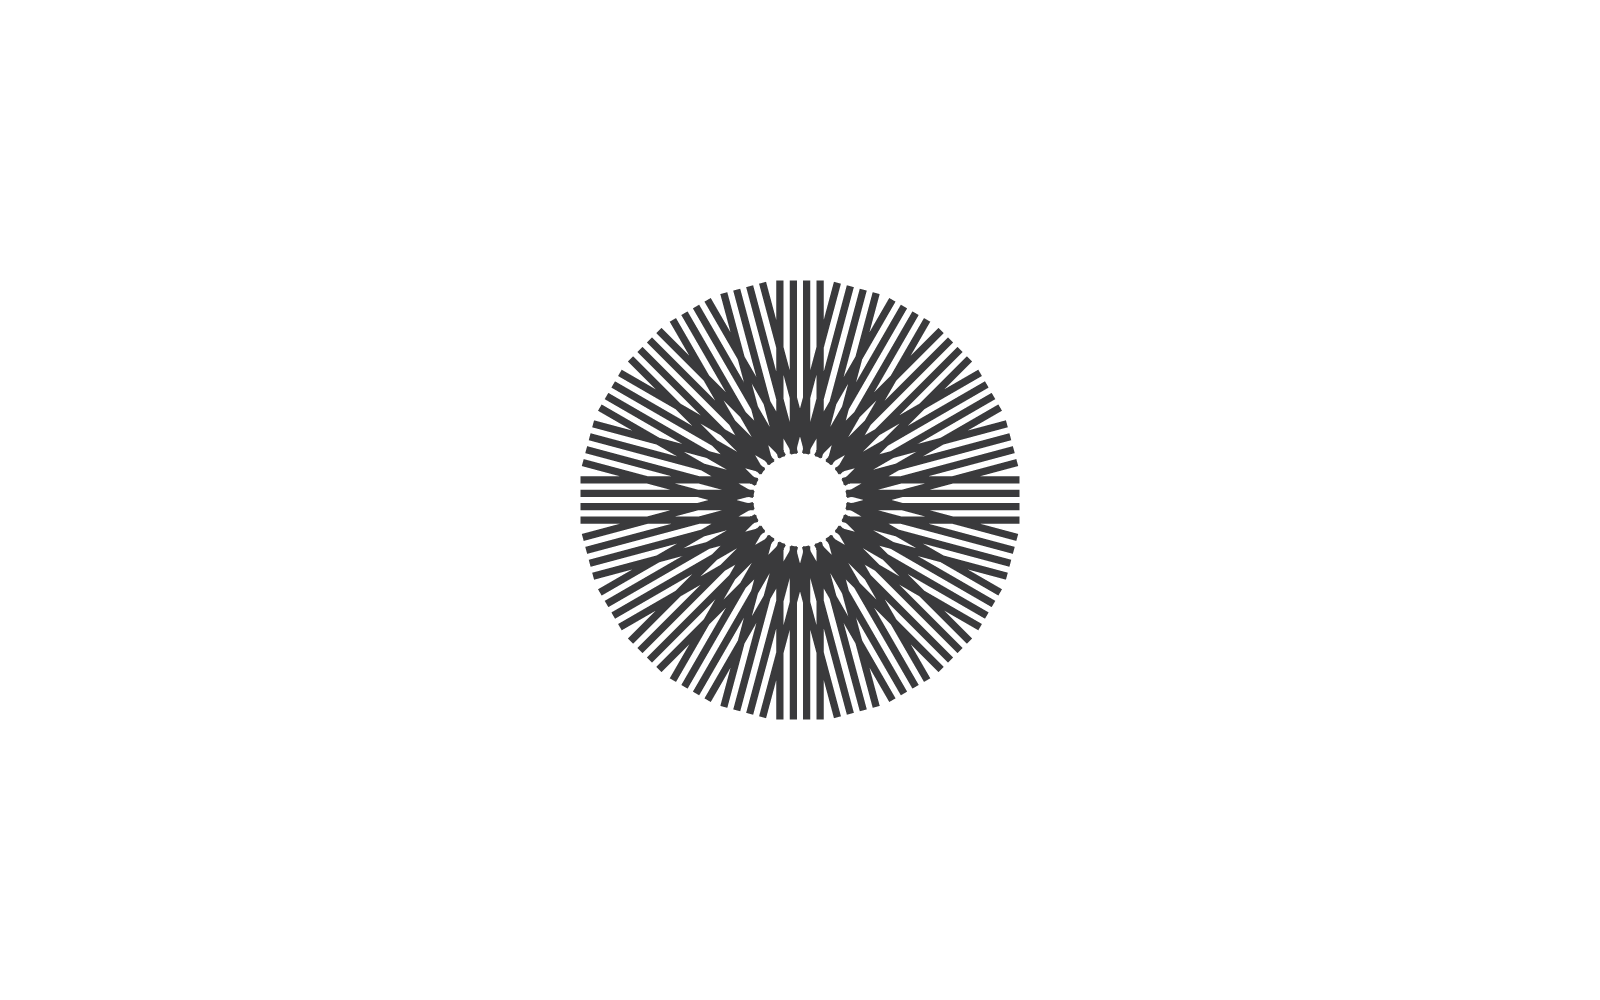 Sunburst design illustration icon vector